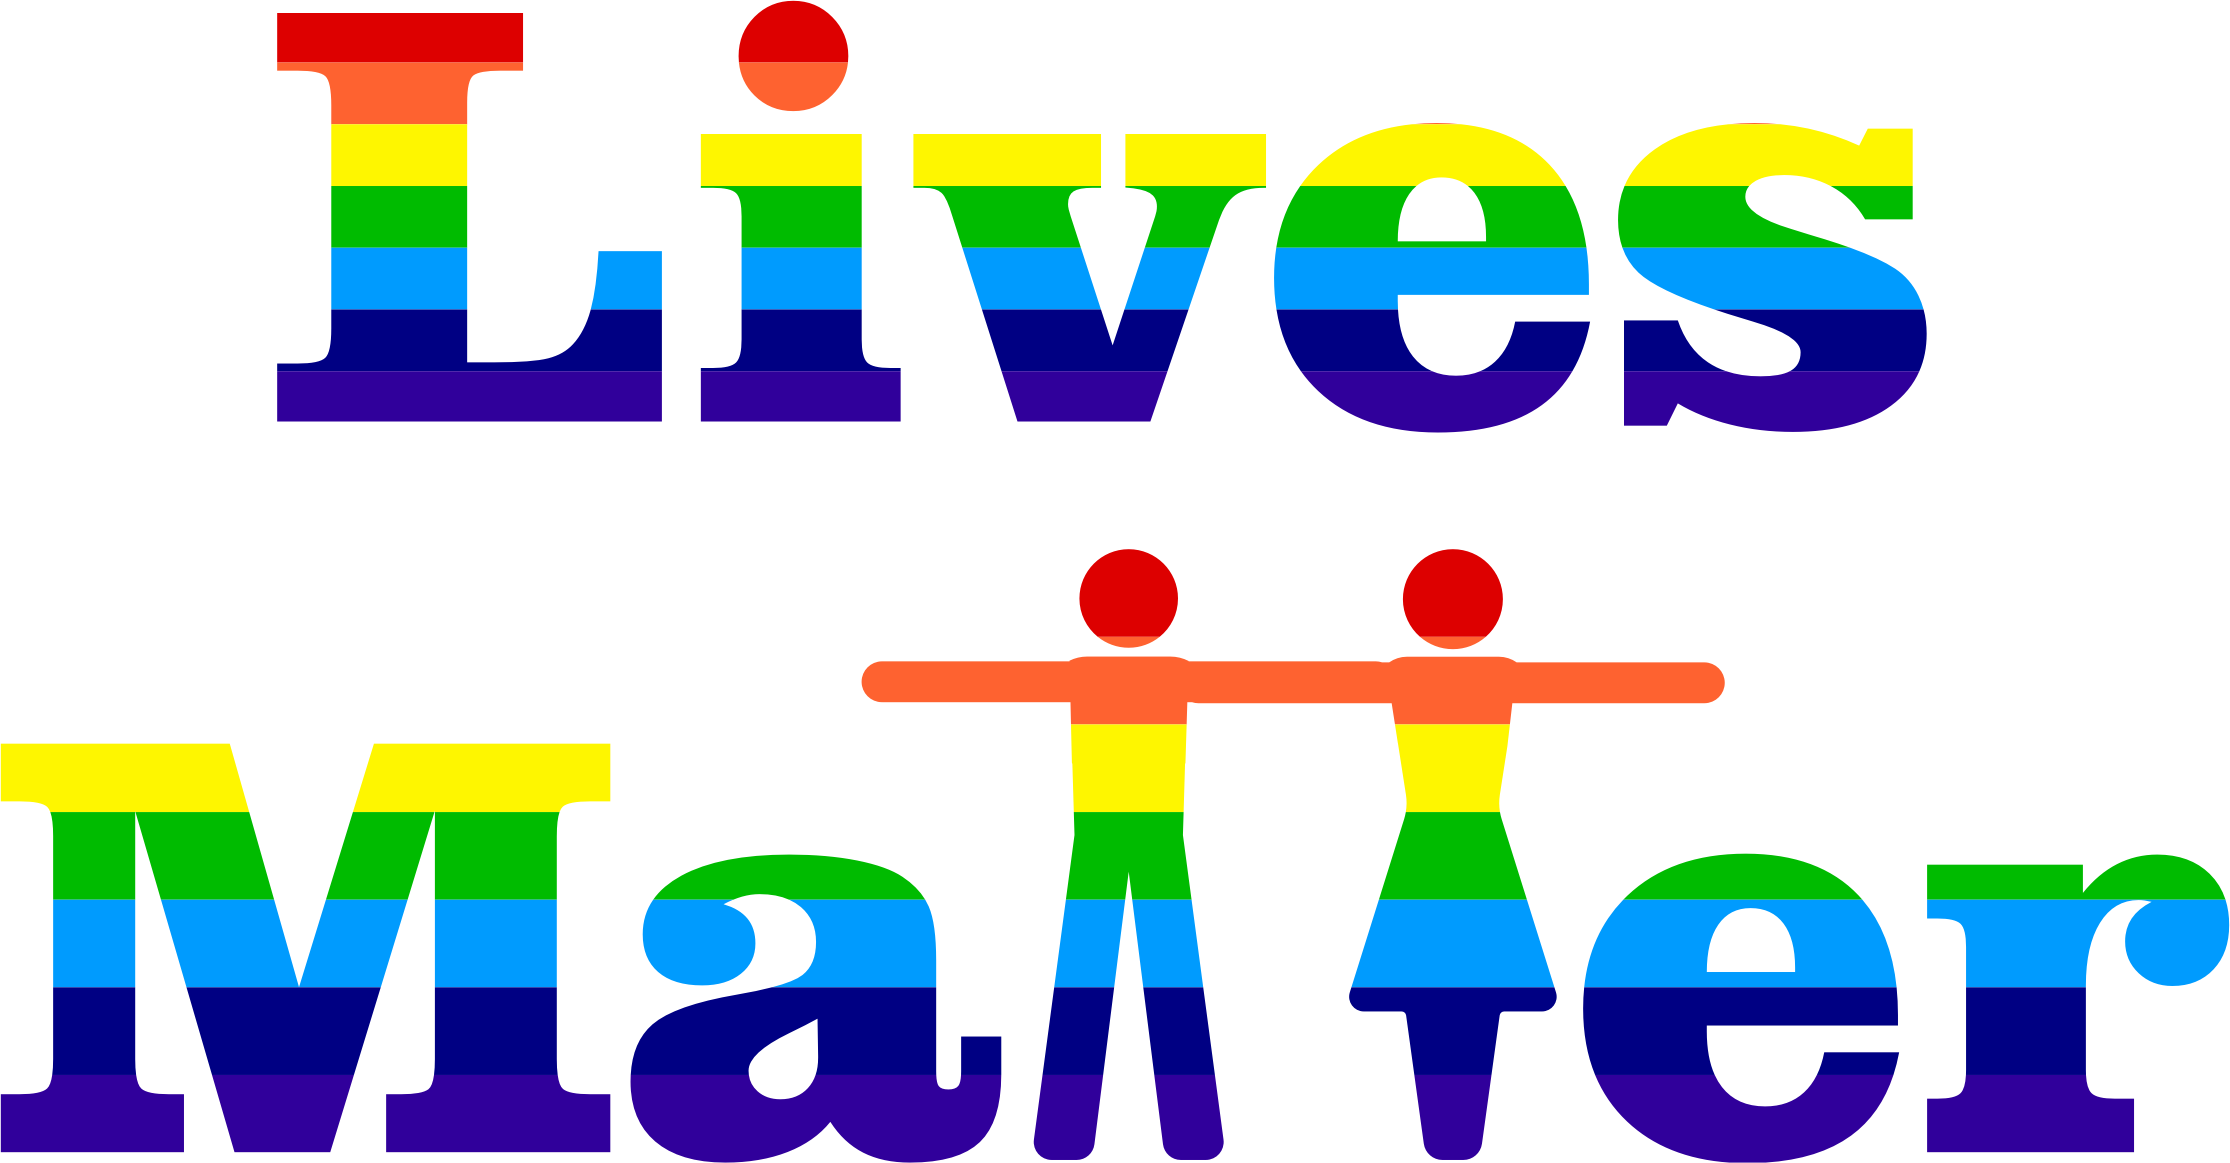 Lives Matter Typography 2 - Personalisierte Bisexual-frau-leben-angelegenheit Ornament (2230x1163)